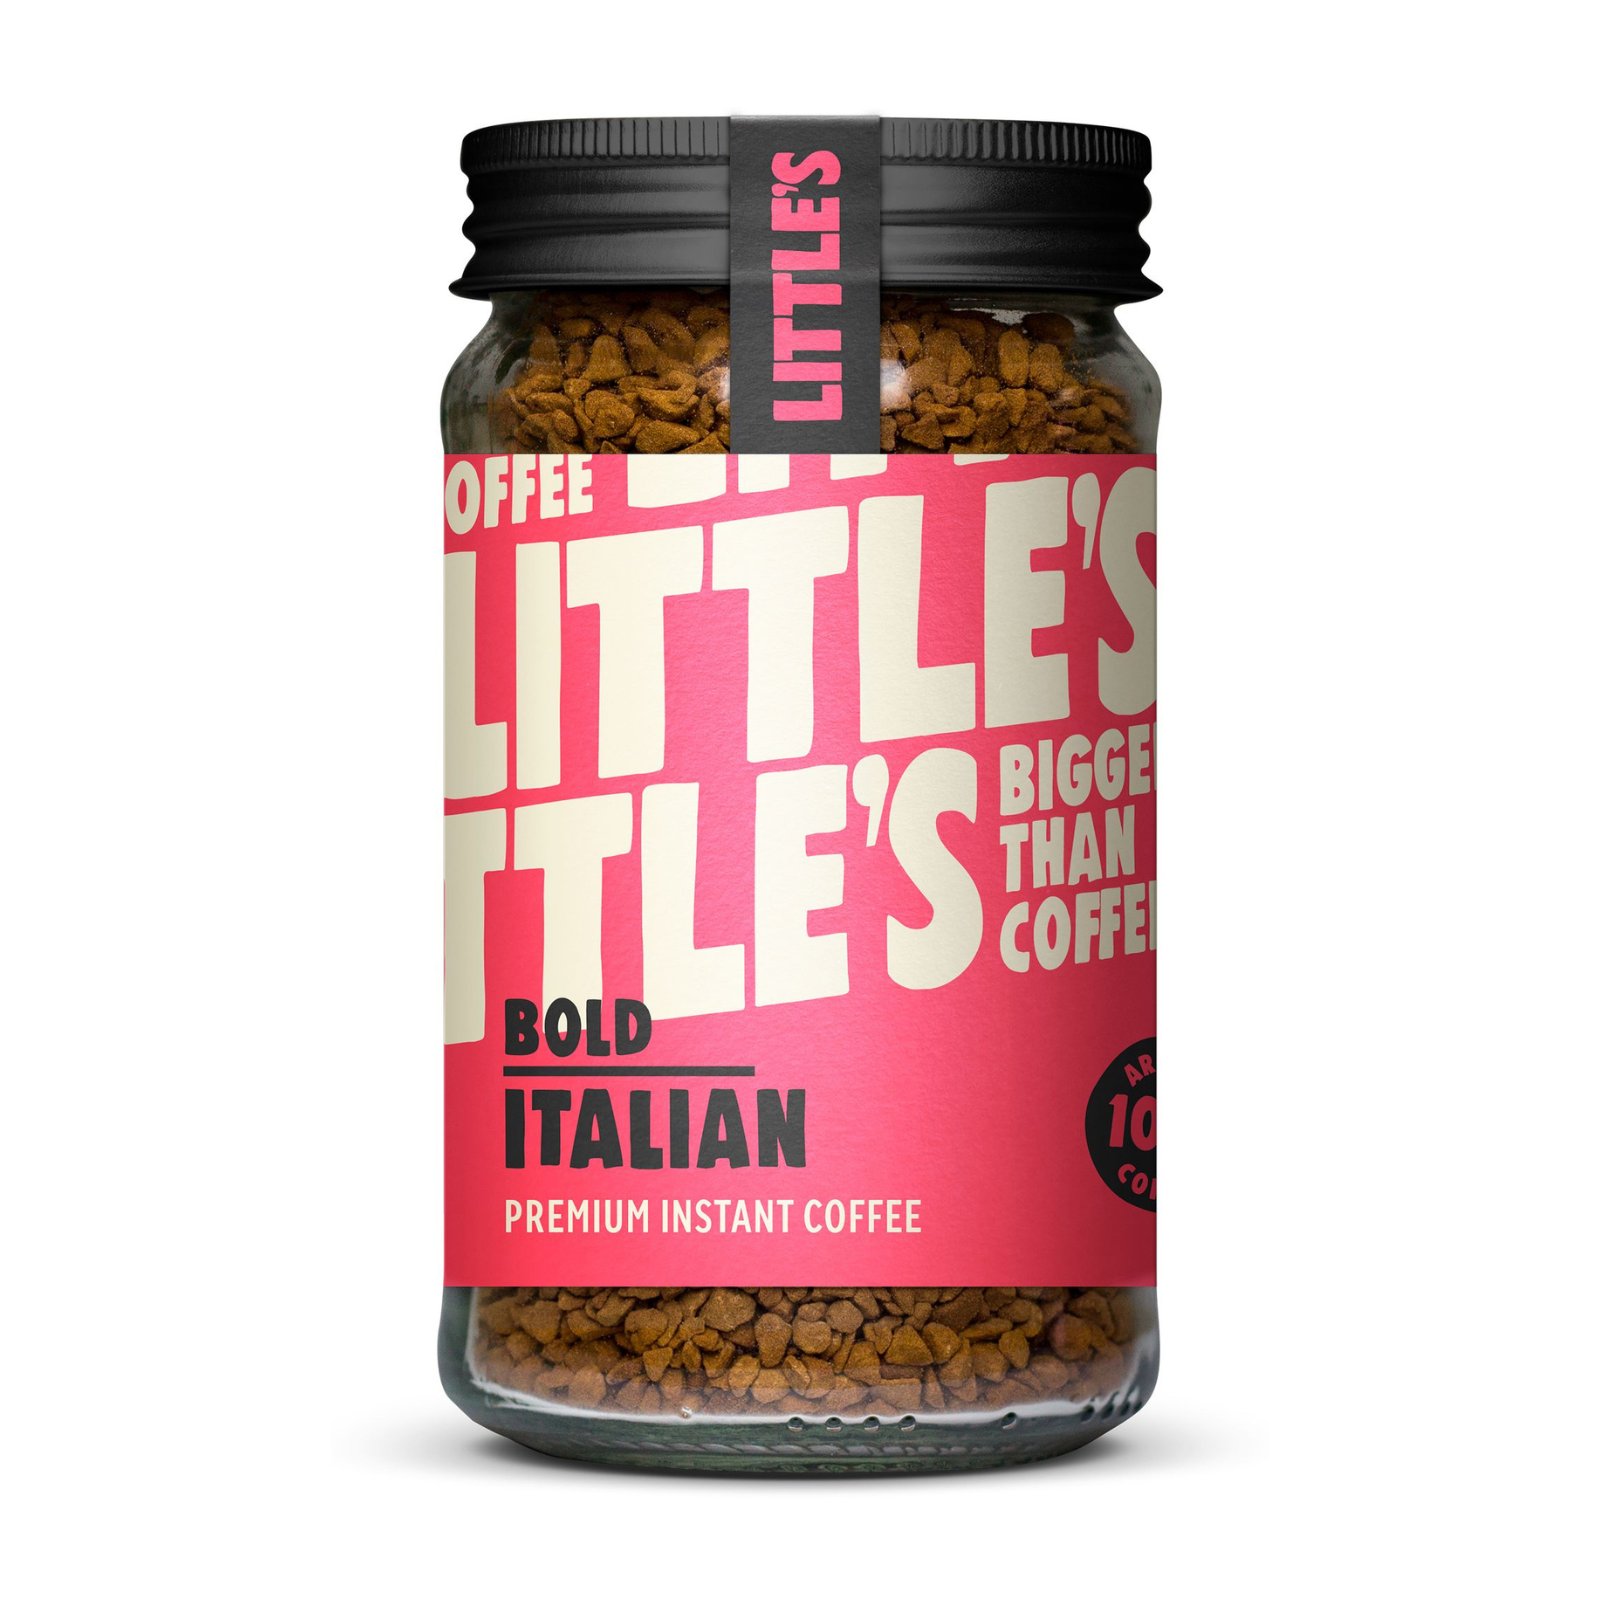 Little's Bold Italian Instant Coffee